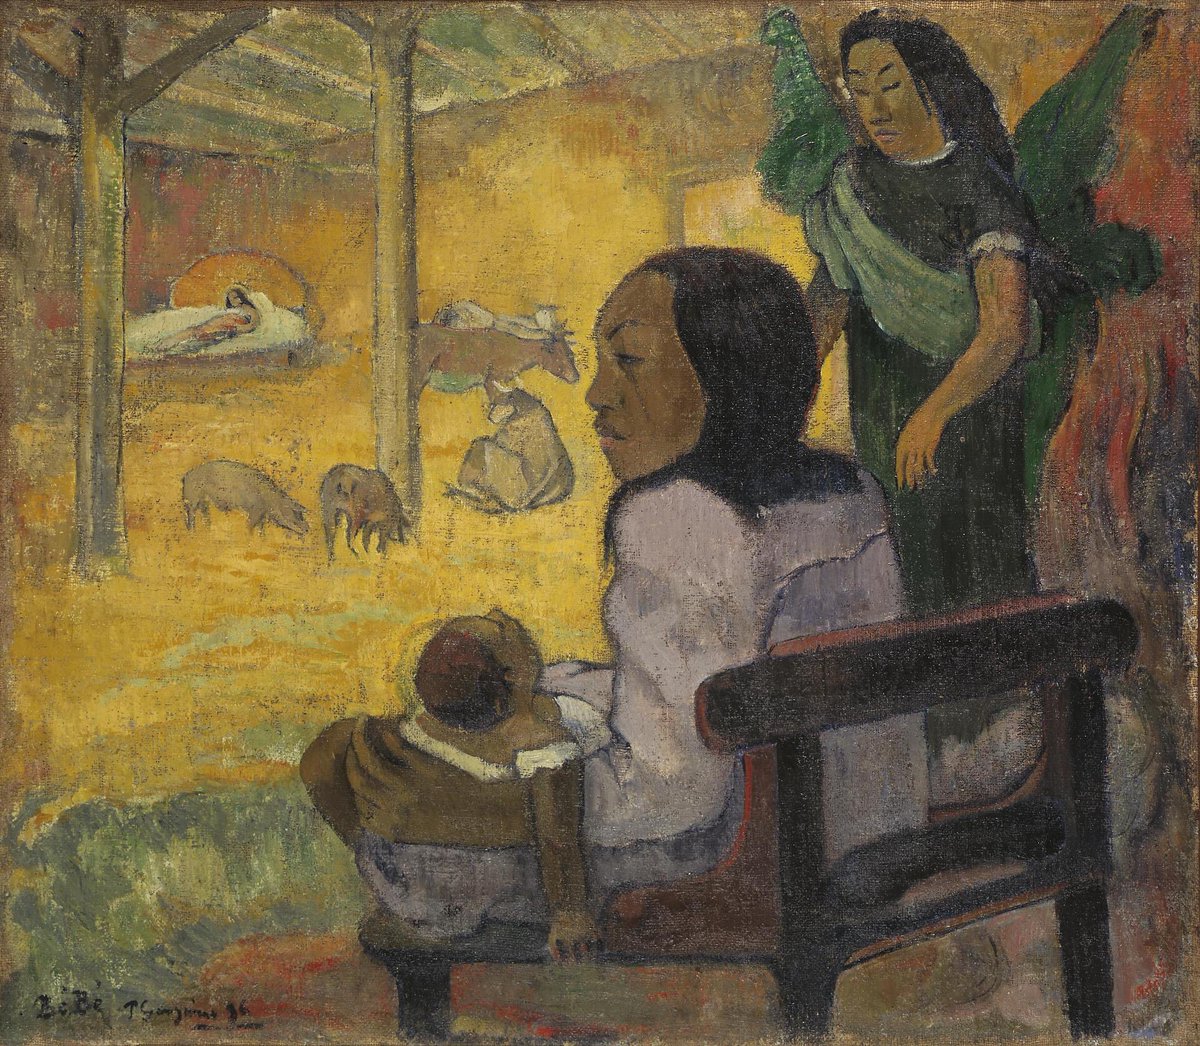 Nativity, Paul Gauguin, 1896, with a Tahitan setting